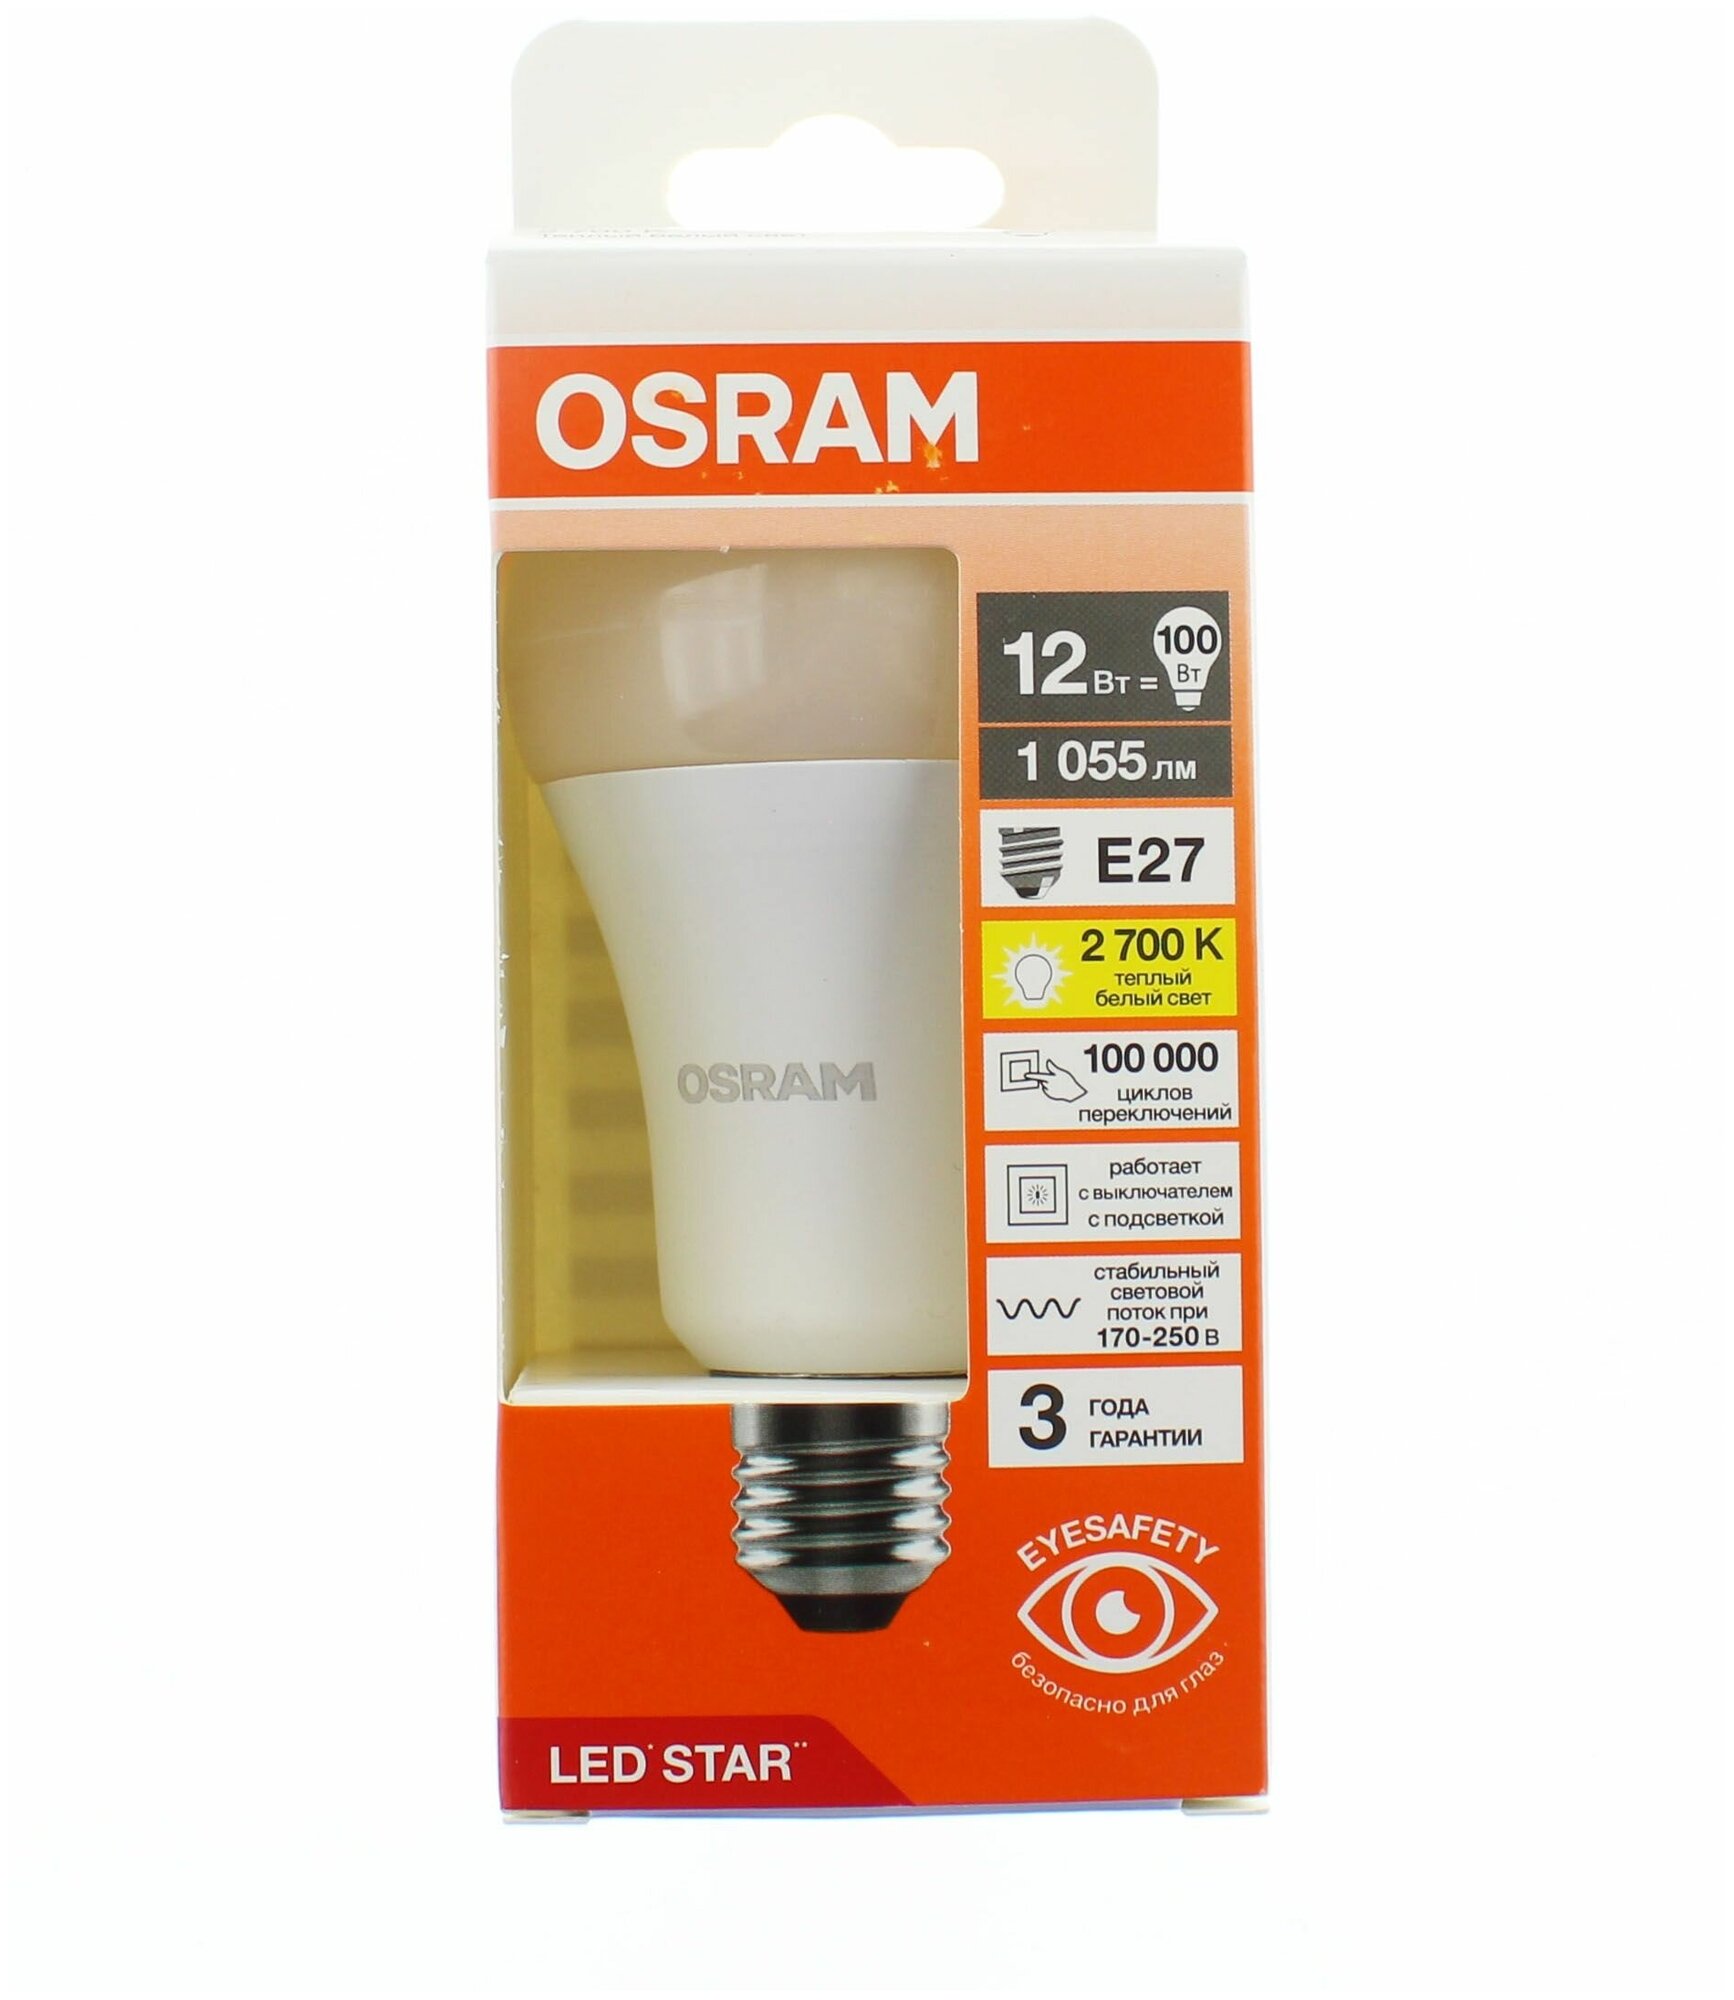 Лампа "груша" светодиодная OSRAM LED Star 12Вт 2700К E27